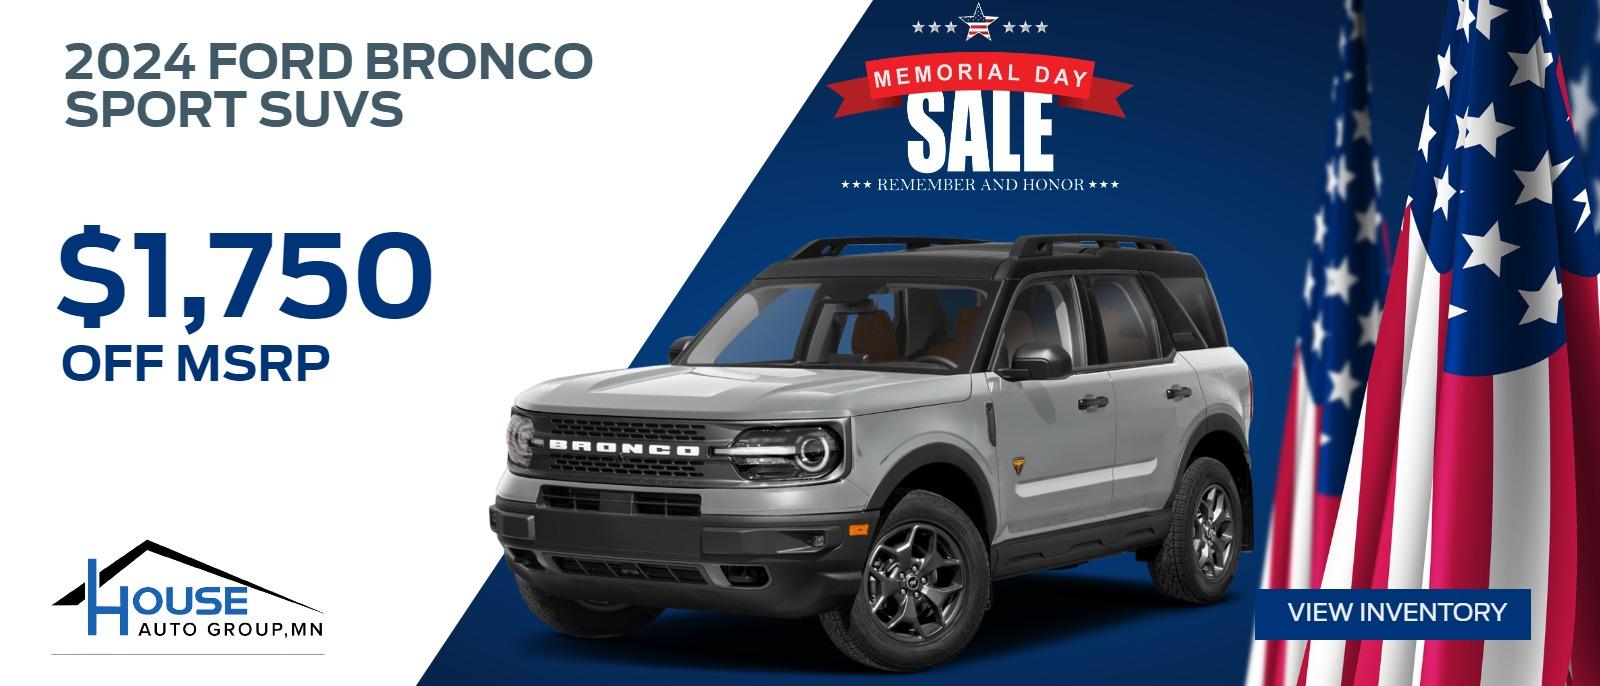 2024 Ford Bronco Sport SUVs -- $1,750 Off MSRP!